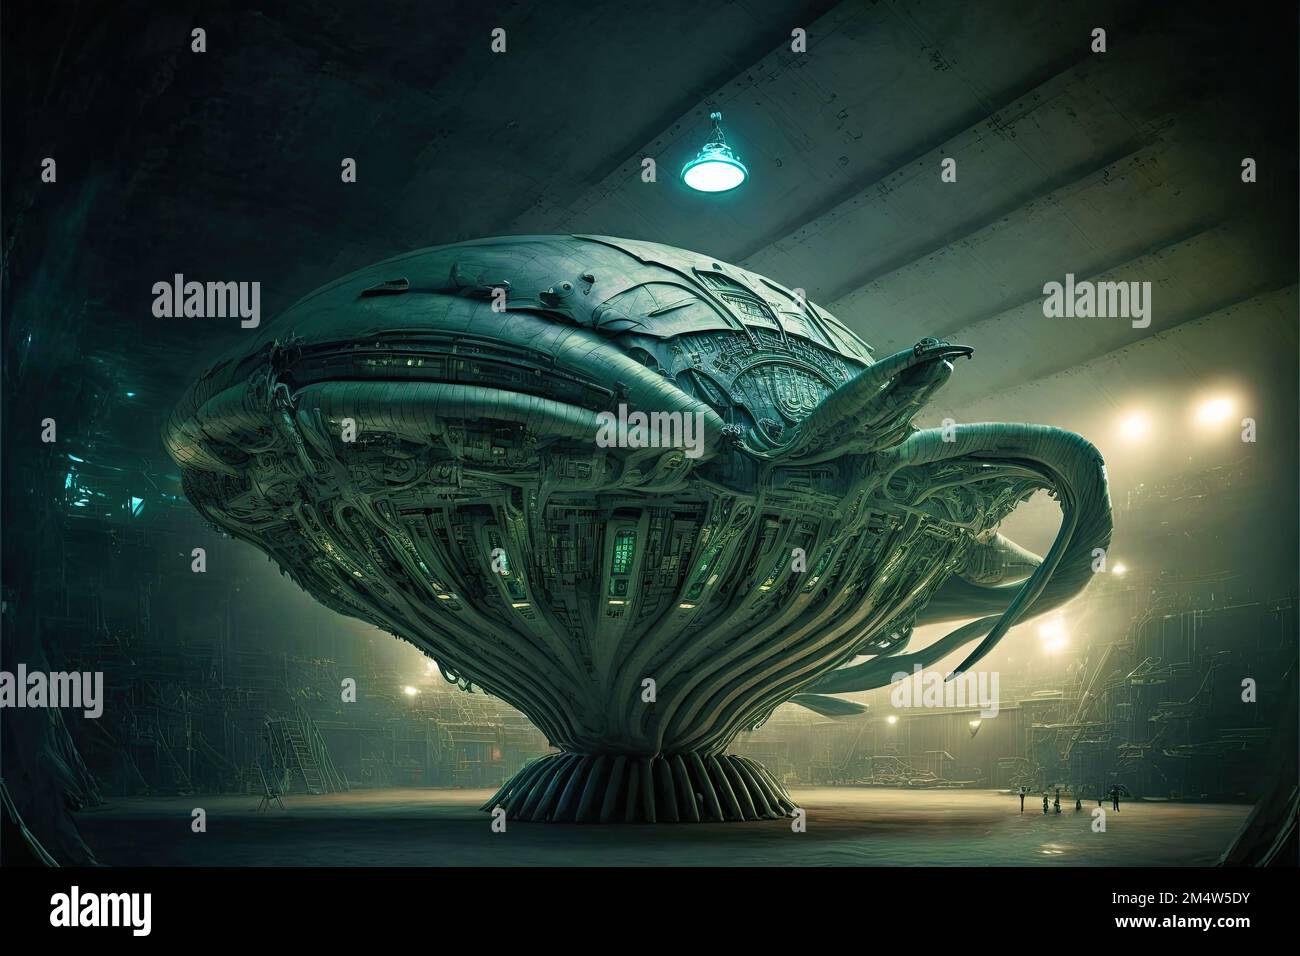 alien spacecraft concept